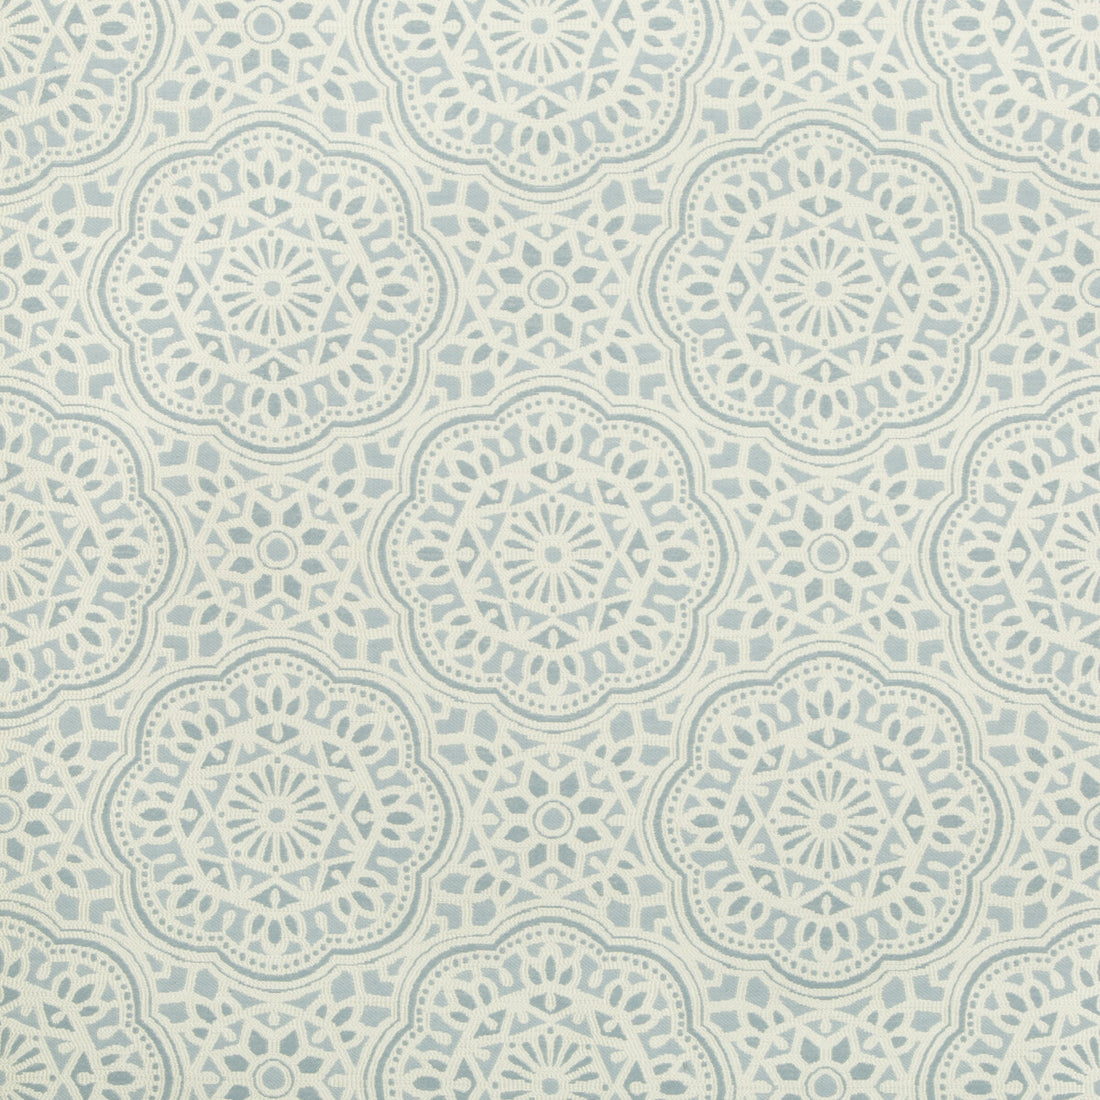 Kravet Design fabric in 34724-1615 color - pattern 34724.1615.0 - by Kravet Design in the Gis collection